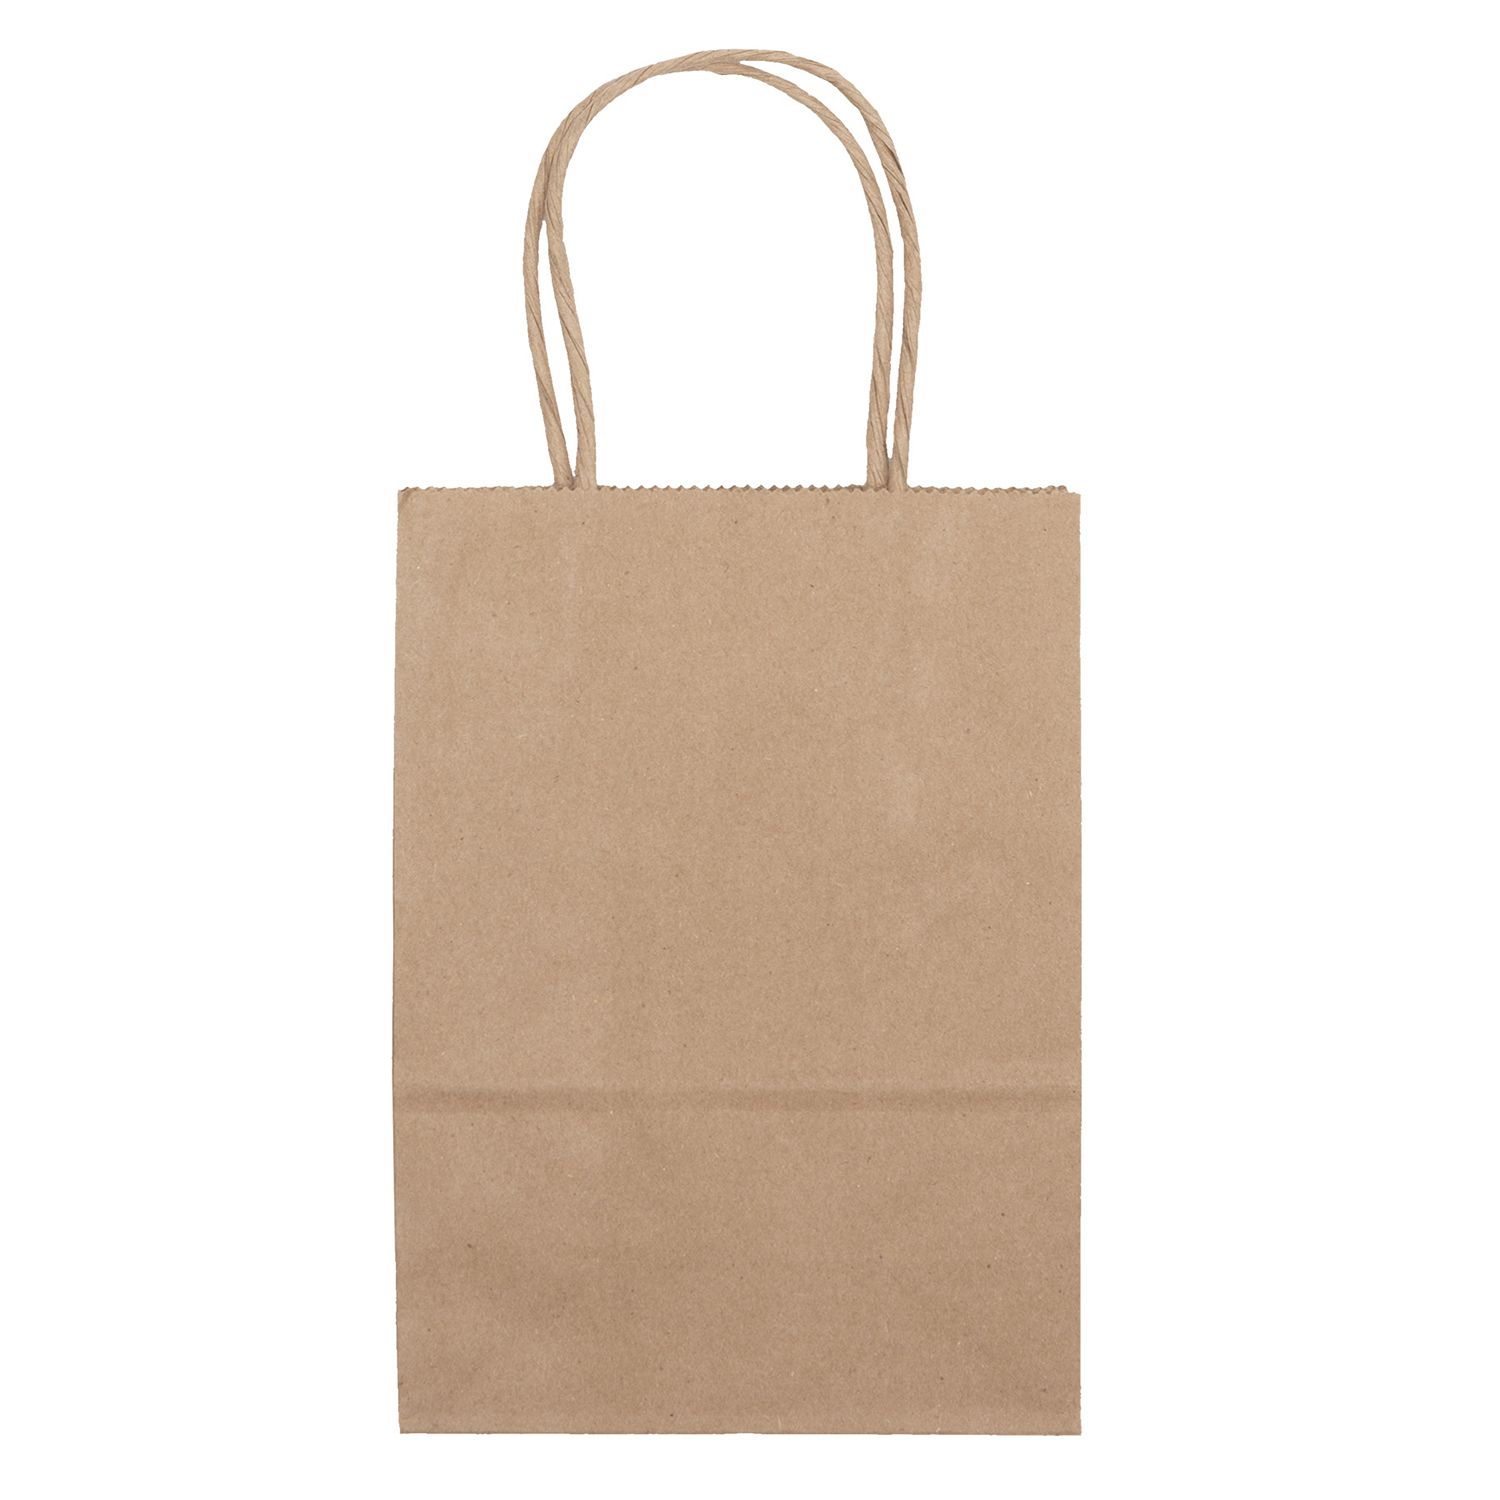 Bag Makers 11ECO58 - Custom Printed Eco-Friendly Promotional Paper Bag